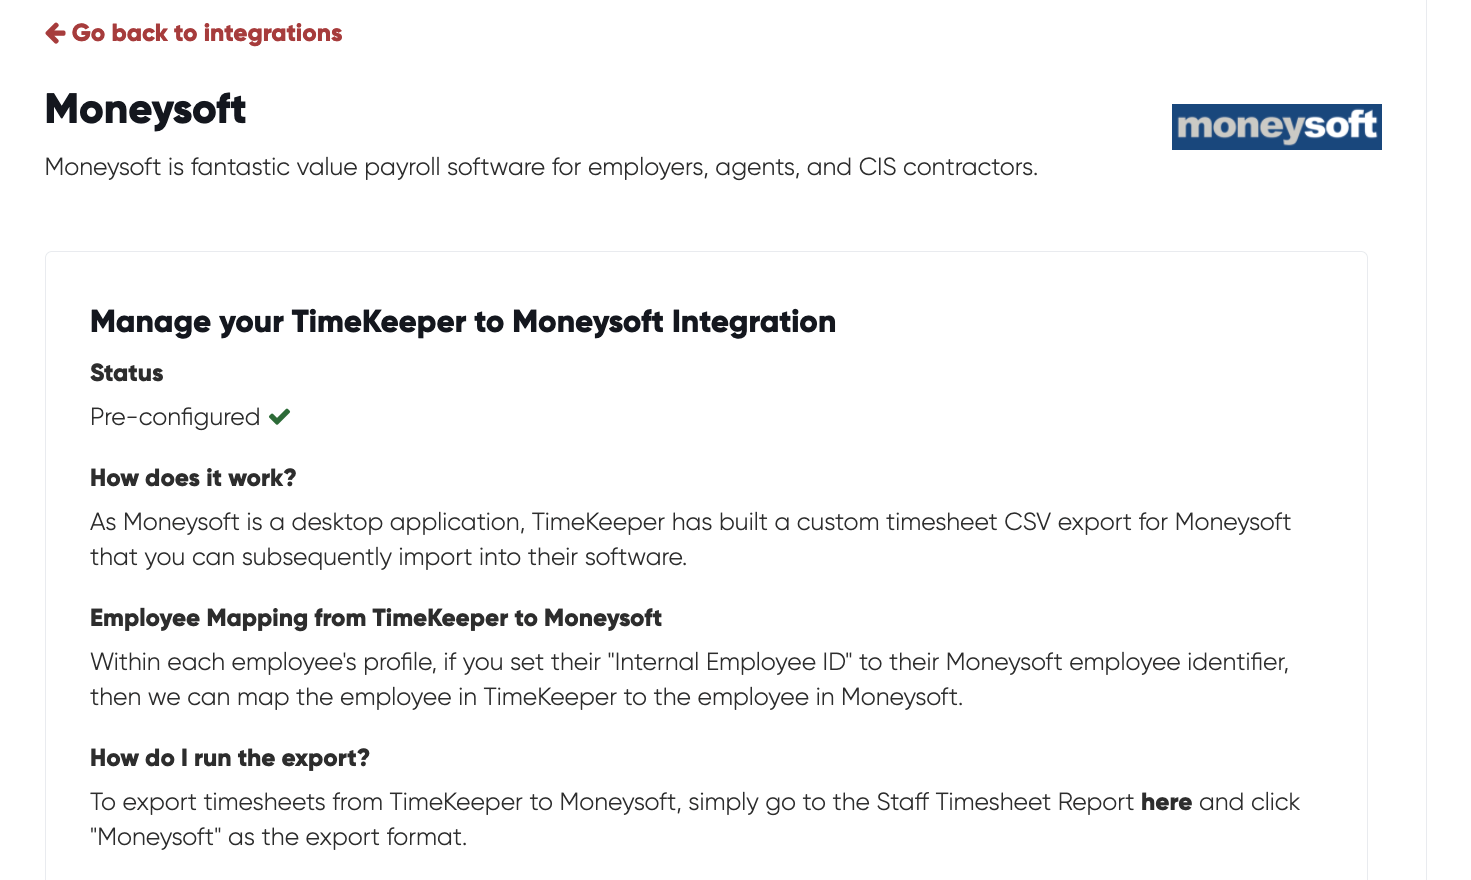 TimeKeeper Moneysoft integration with Timesheets